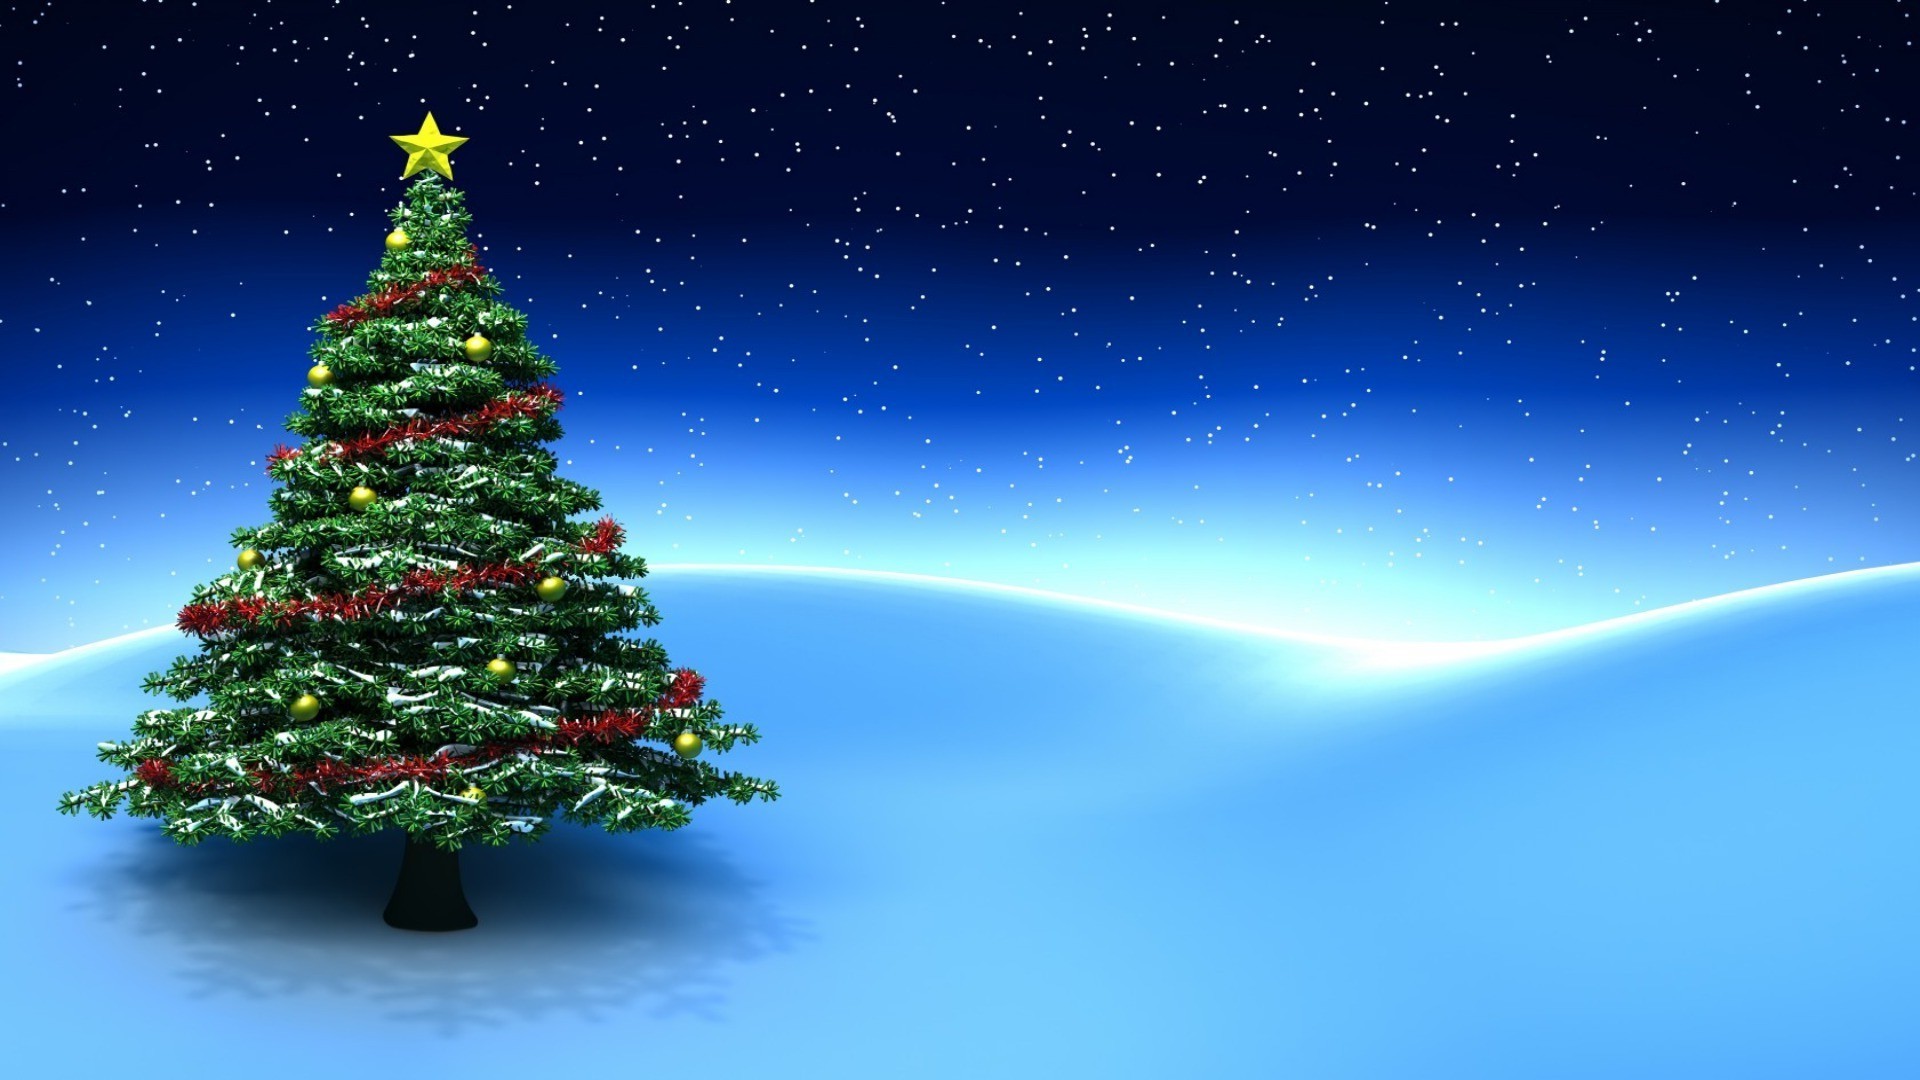 new year christmas winter snow tree christmas tree moon celebration sky outdoors fir evergreen pine conifer light